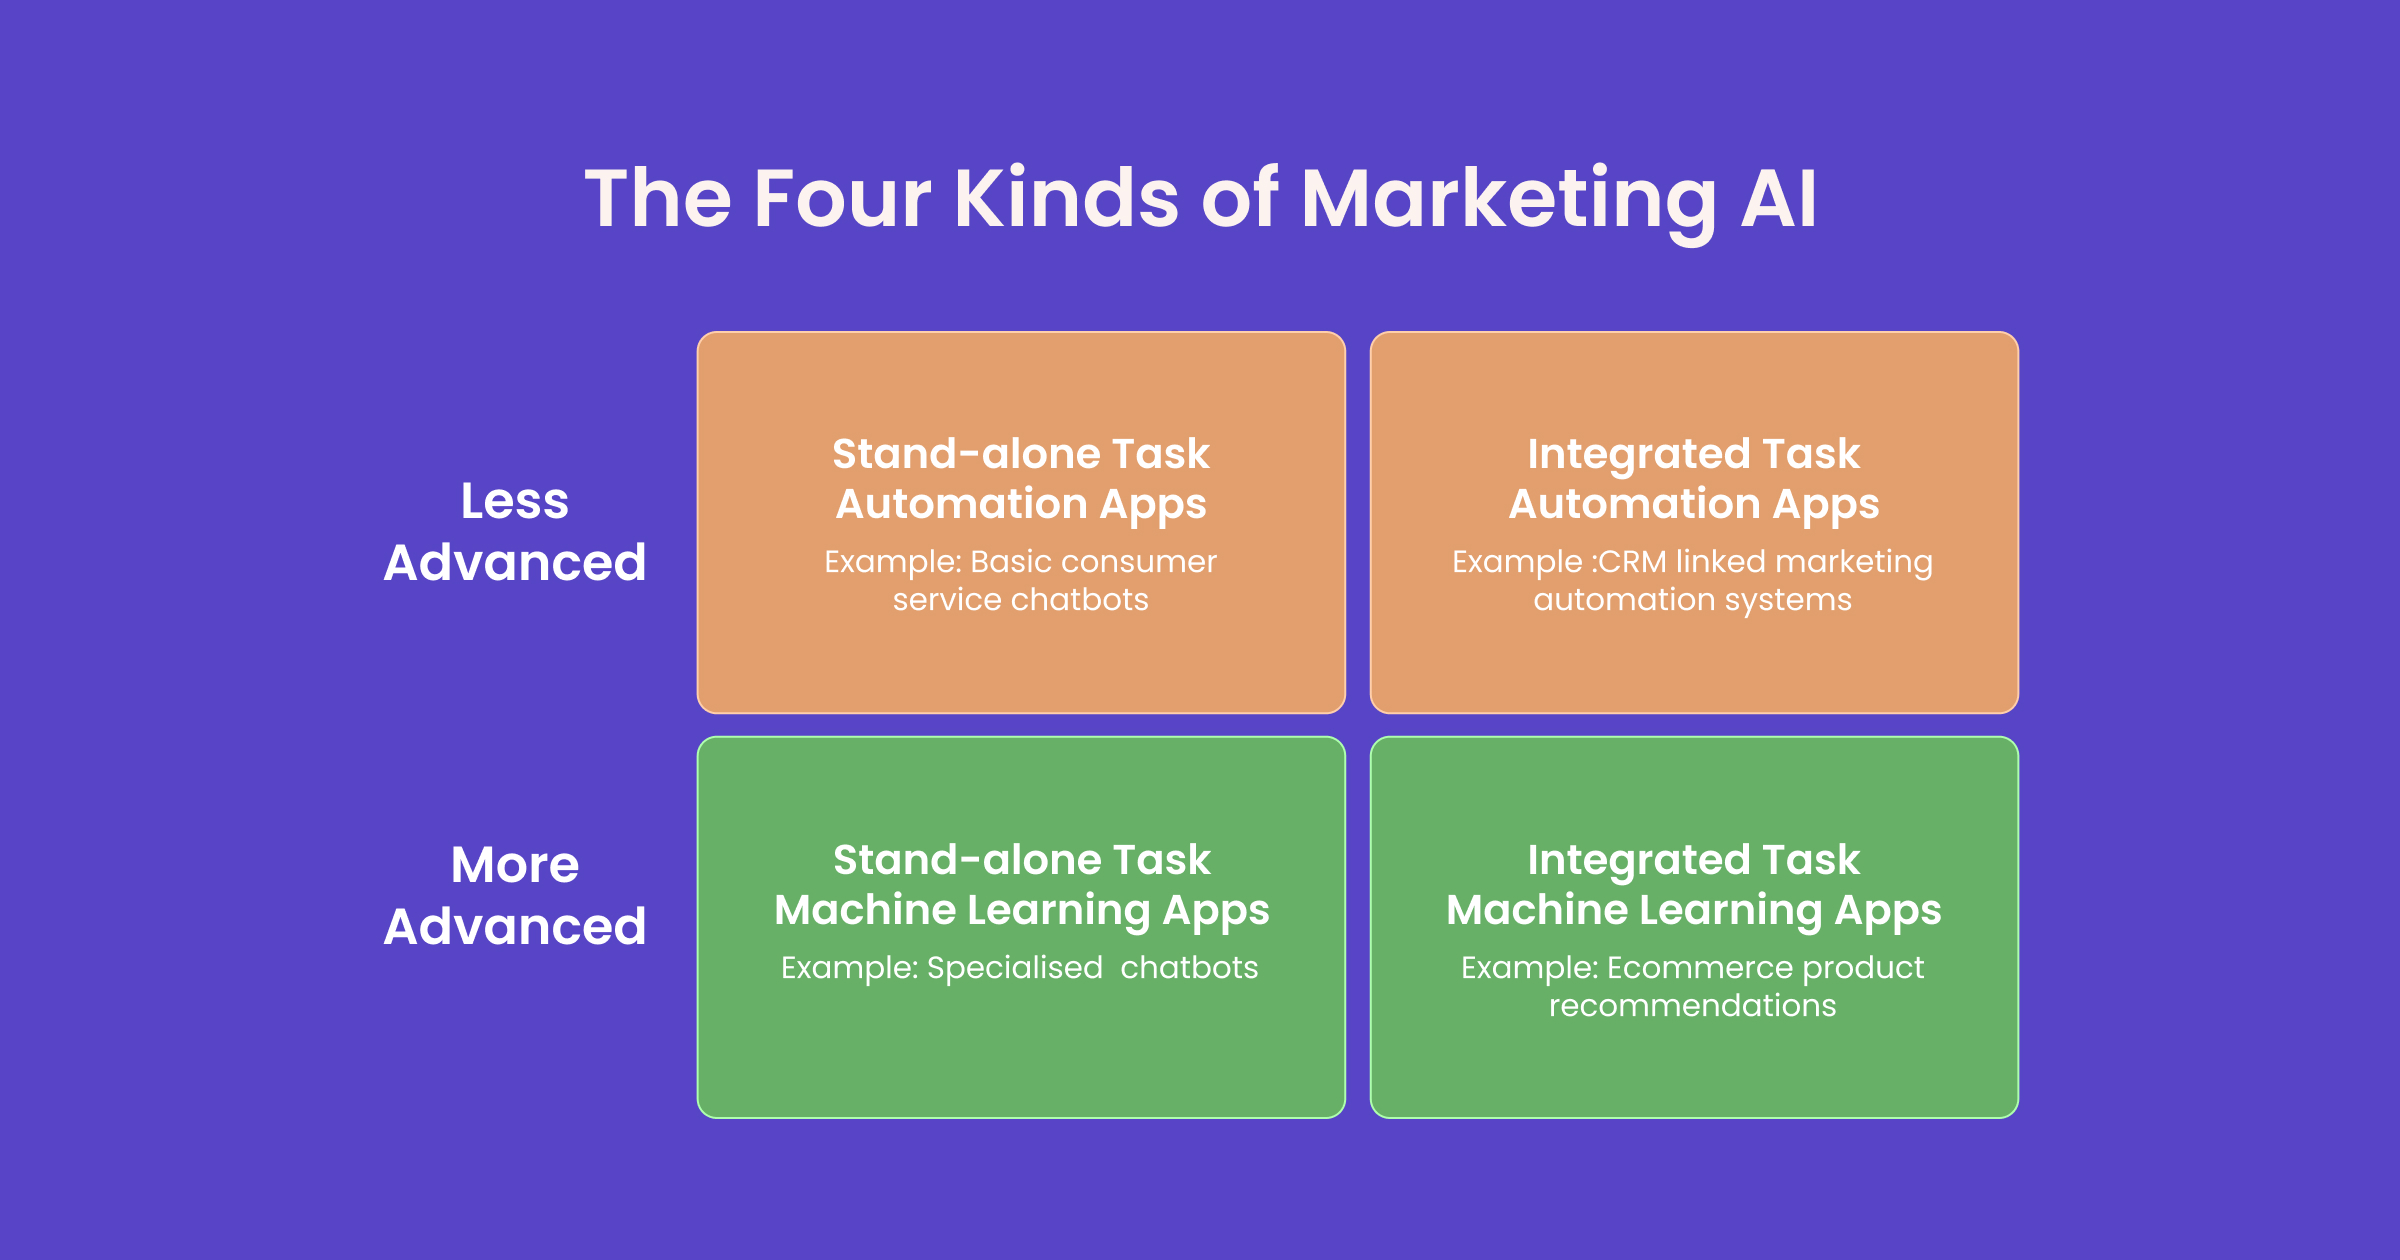 The four kinds of marketing AI